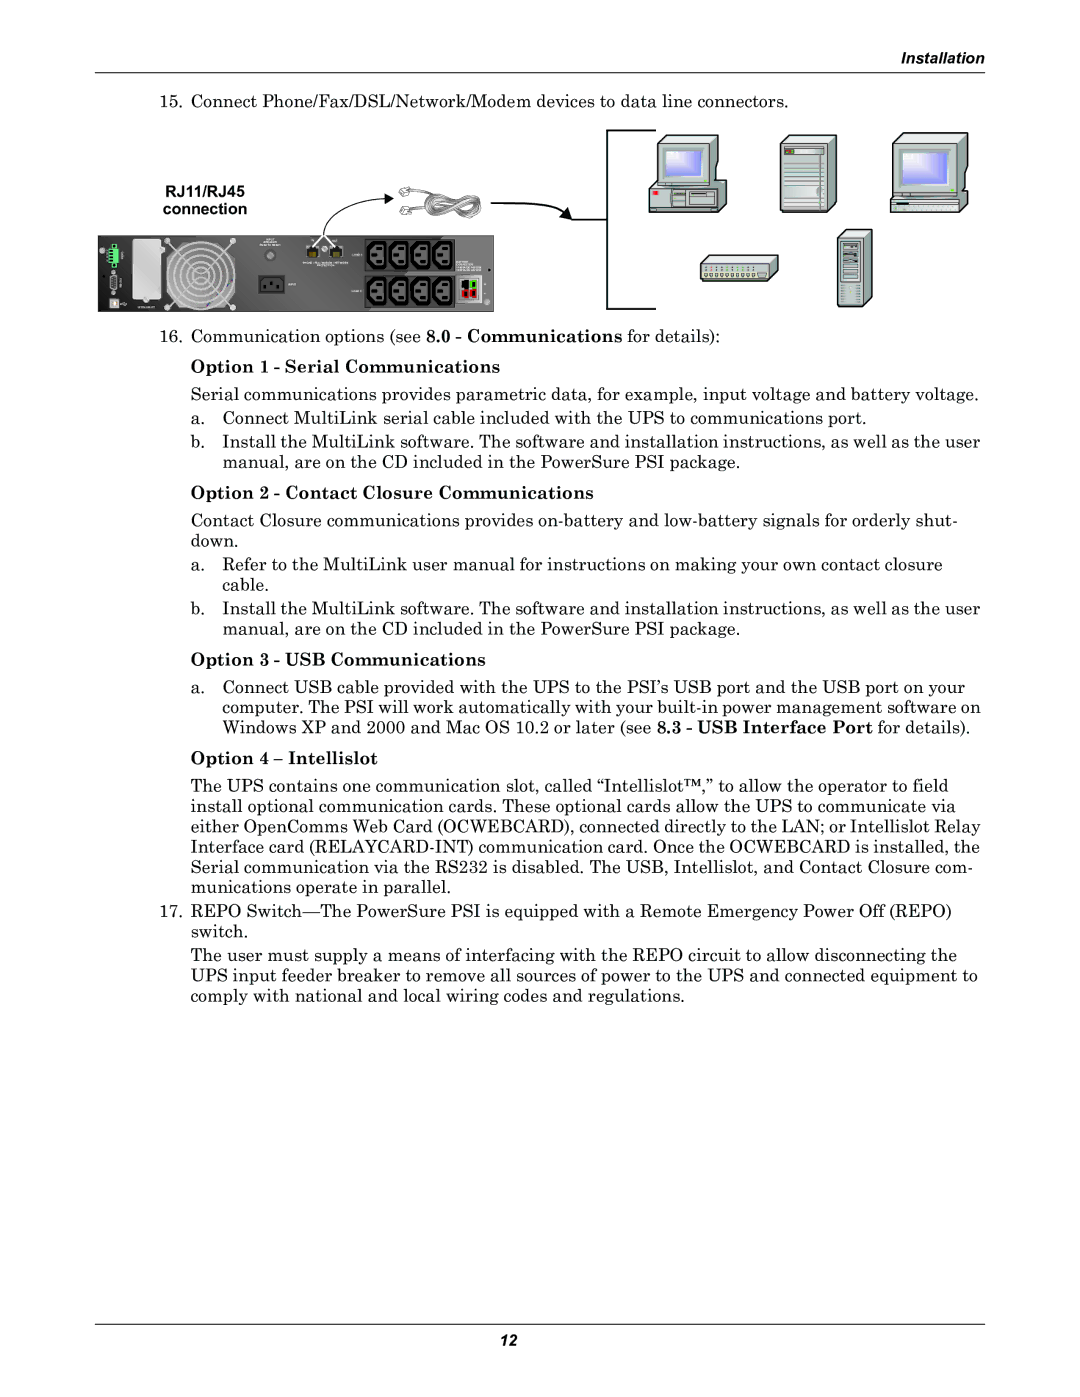 Liebert PSITM user manual Option 1 Serial Communications, RJ11/RJ45 connection 